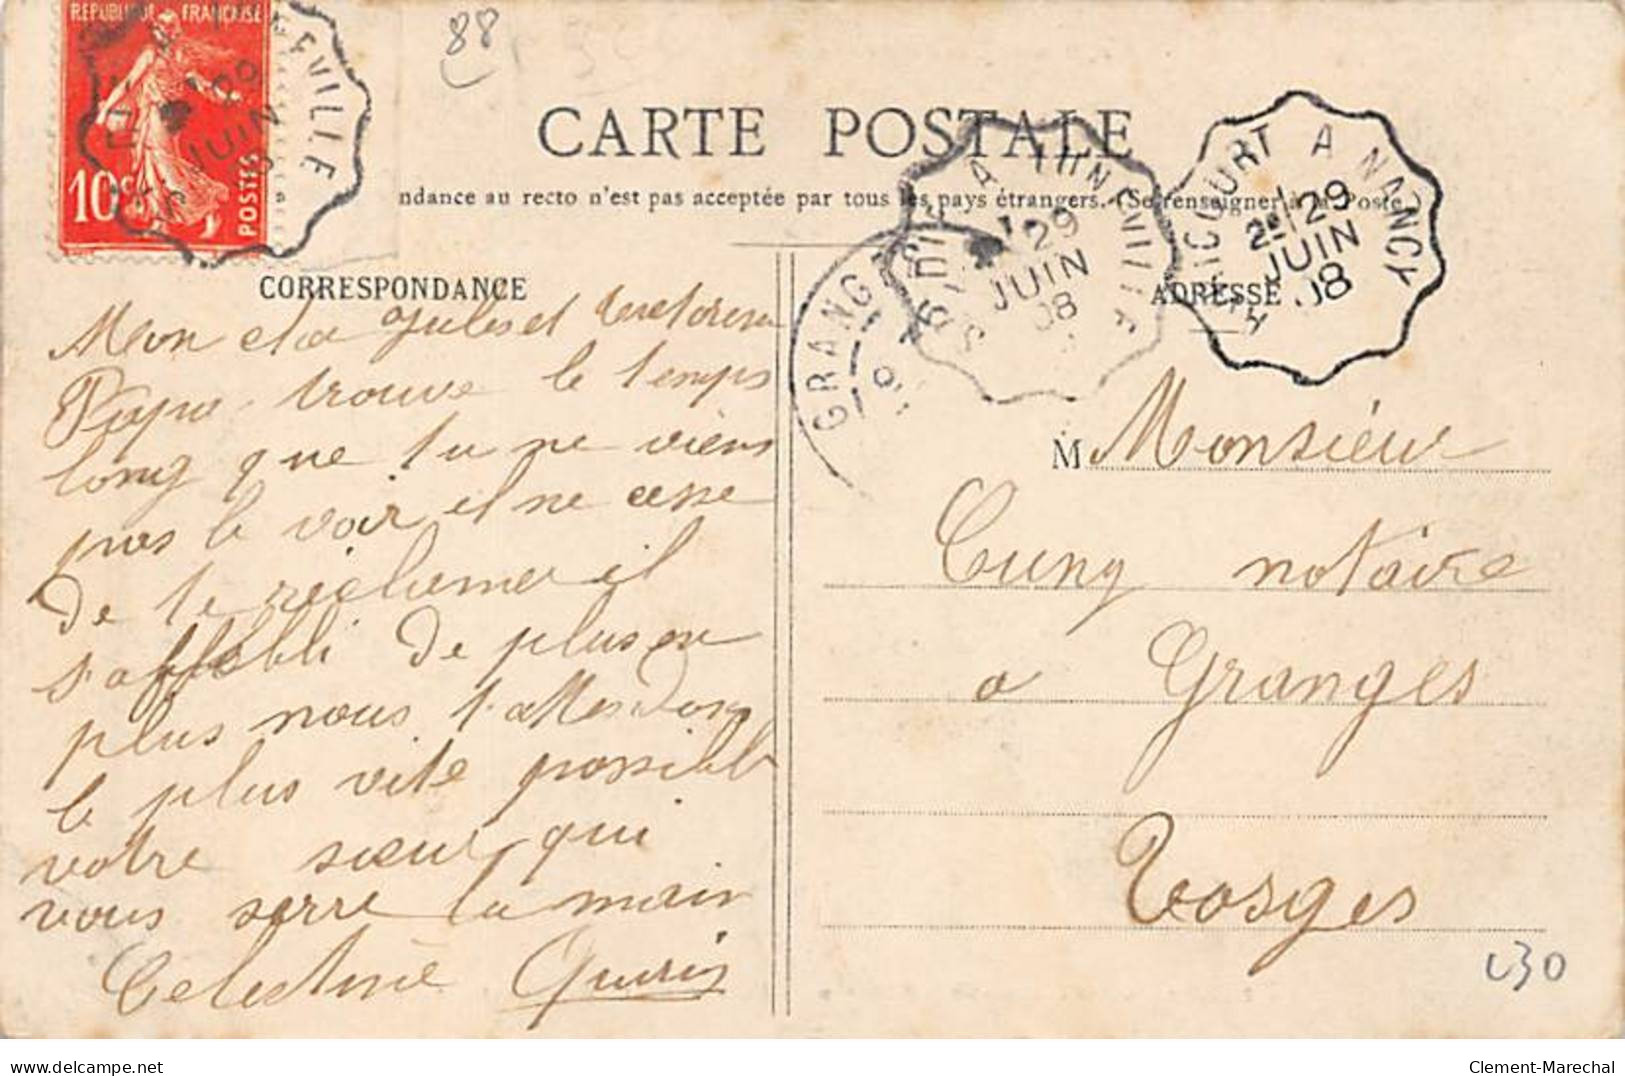 RAON L'ETAPE - La Bagarre Du 28 Juillet 1907 - La Fin De La Charge - Très Bon état - Raon L'Etape